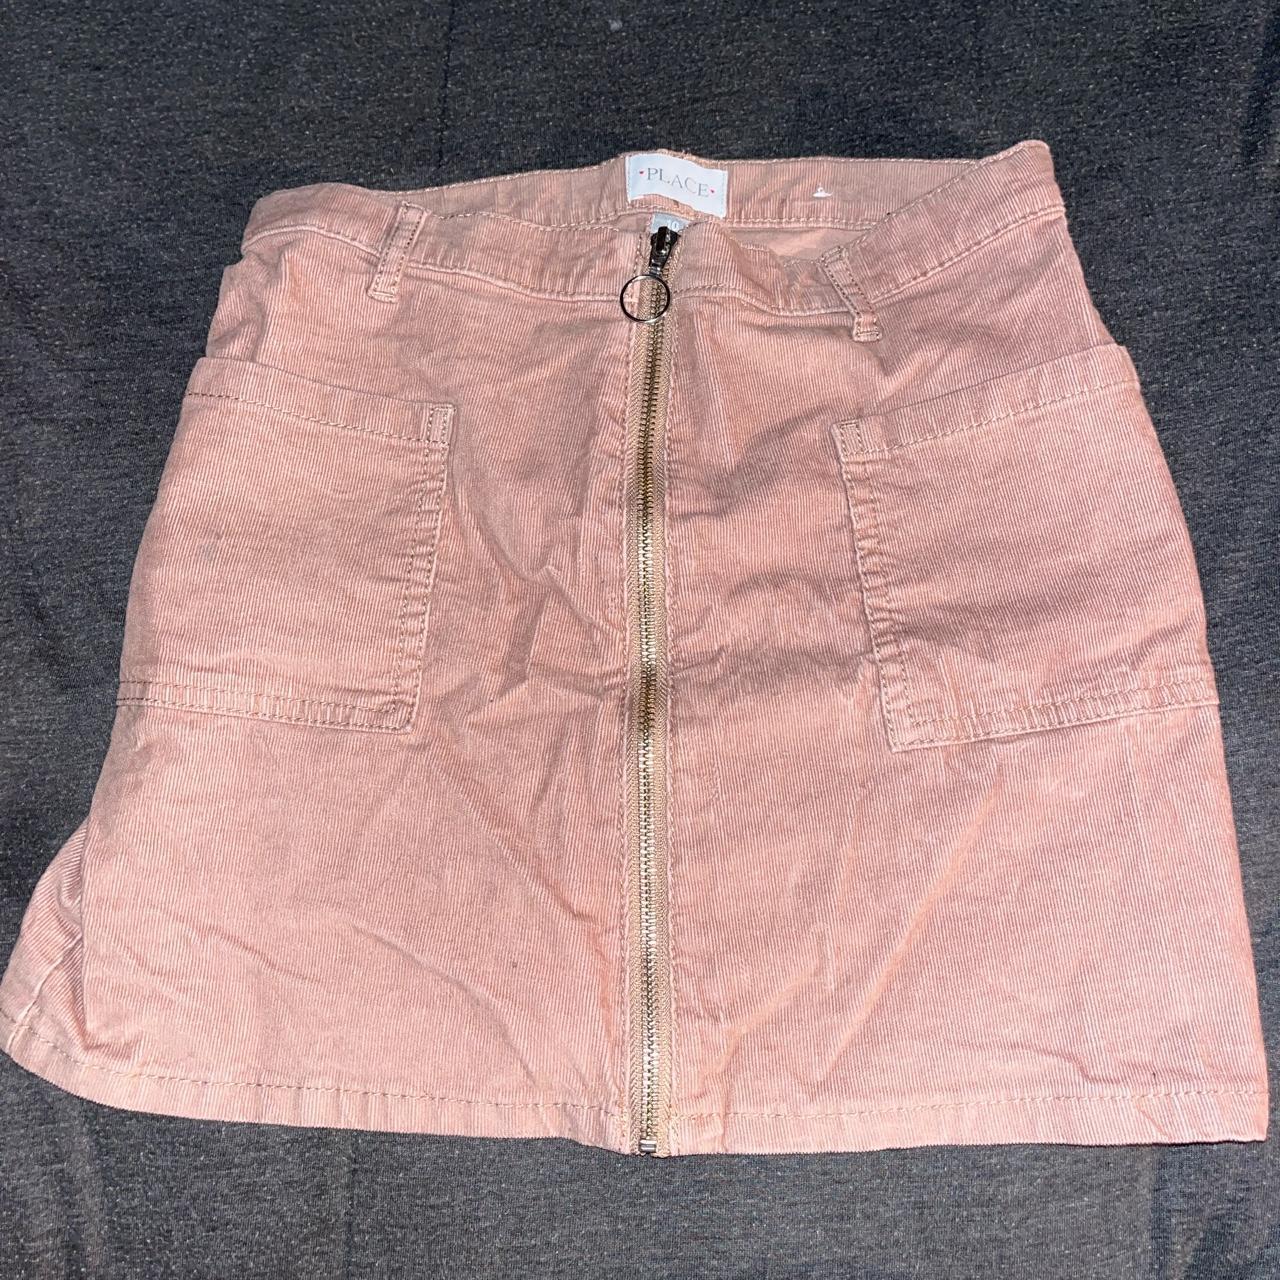 Product Image 1 - Light pink mini skirt
Good for